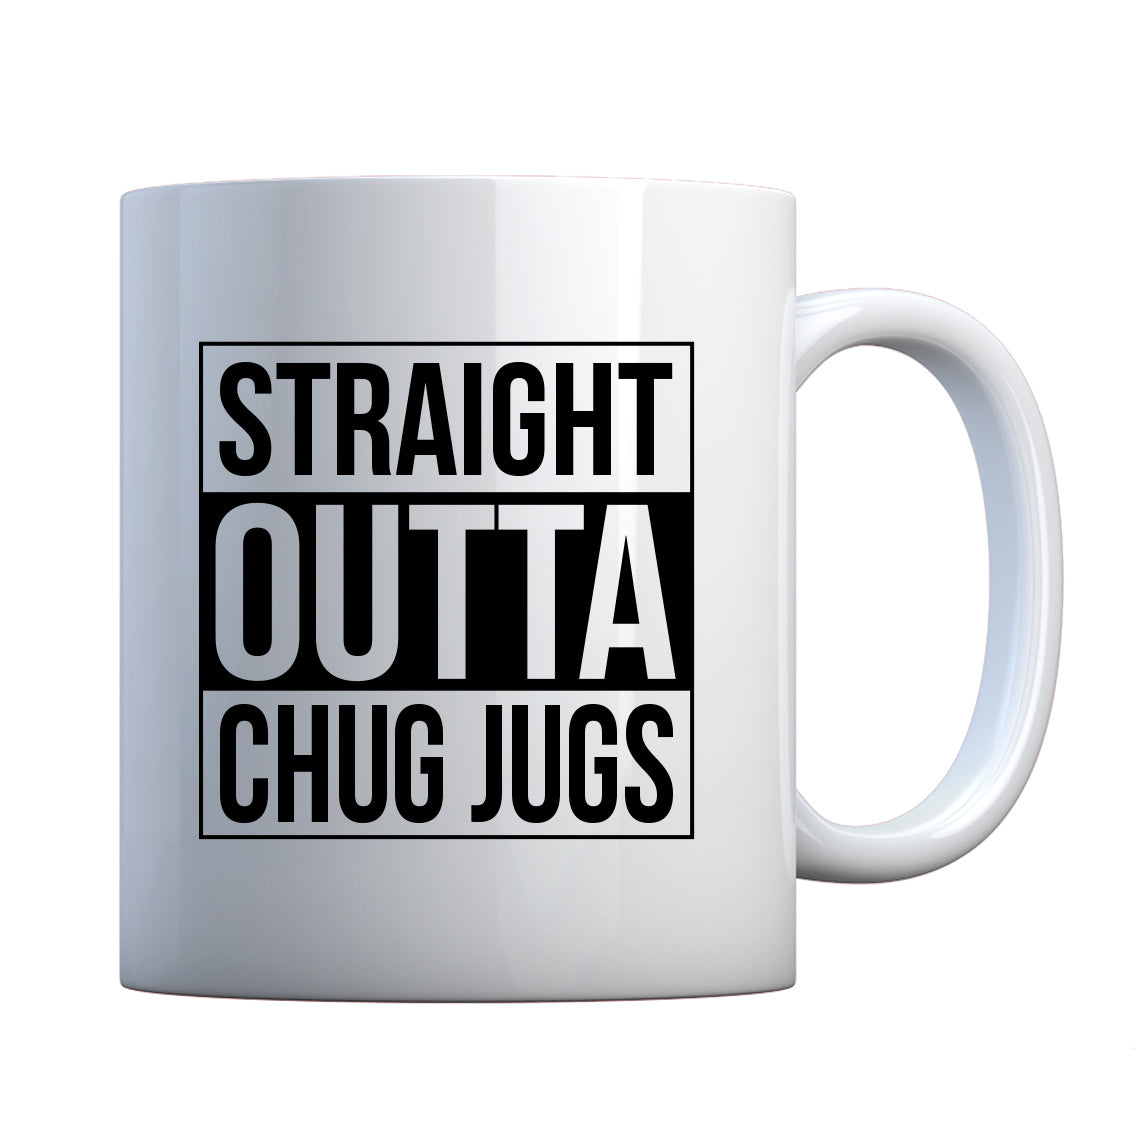 Straight Outta Chug Jugs Ceramic Gift Mug